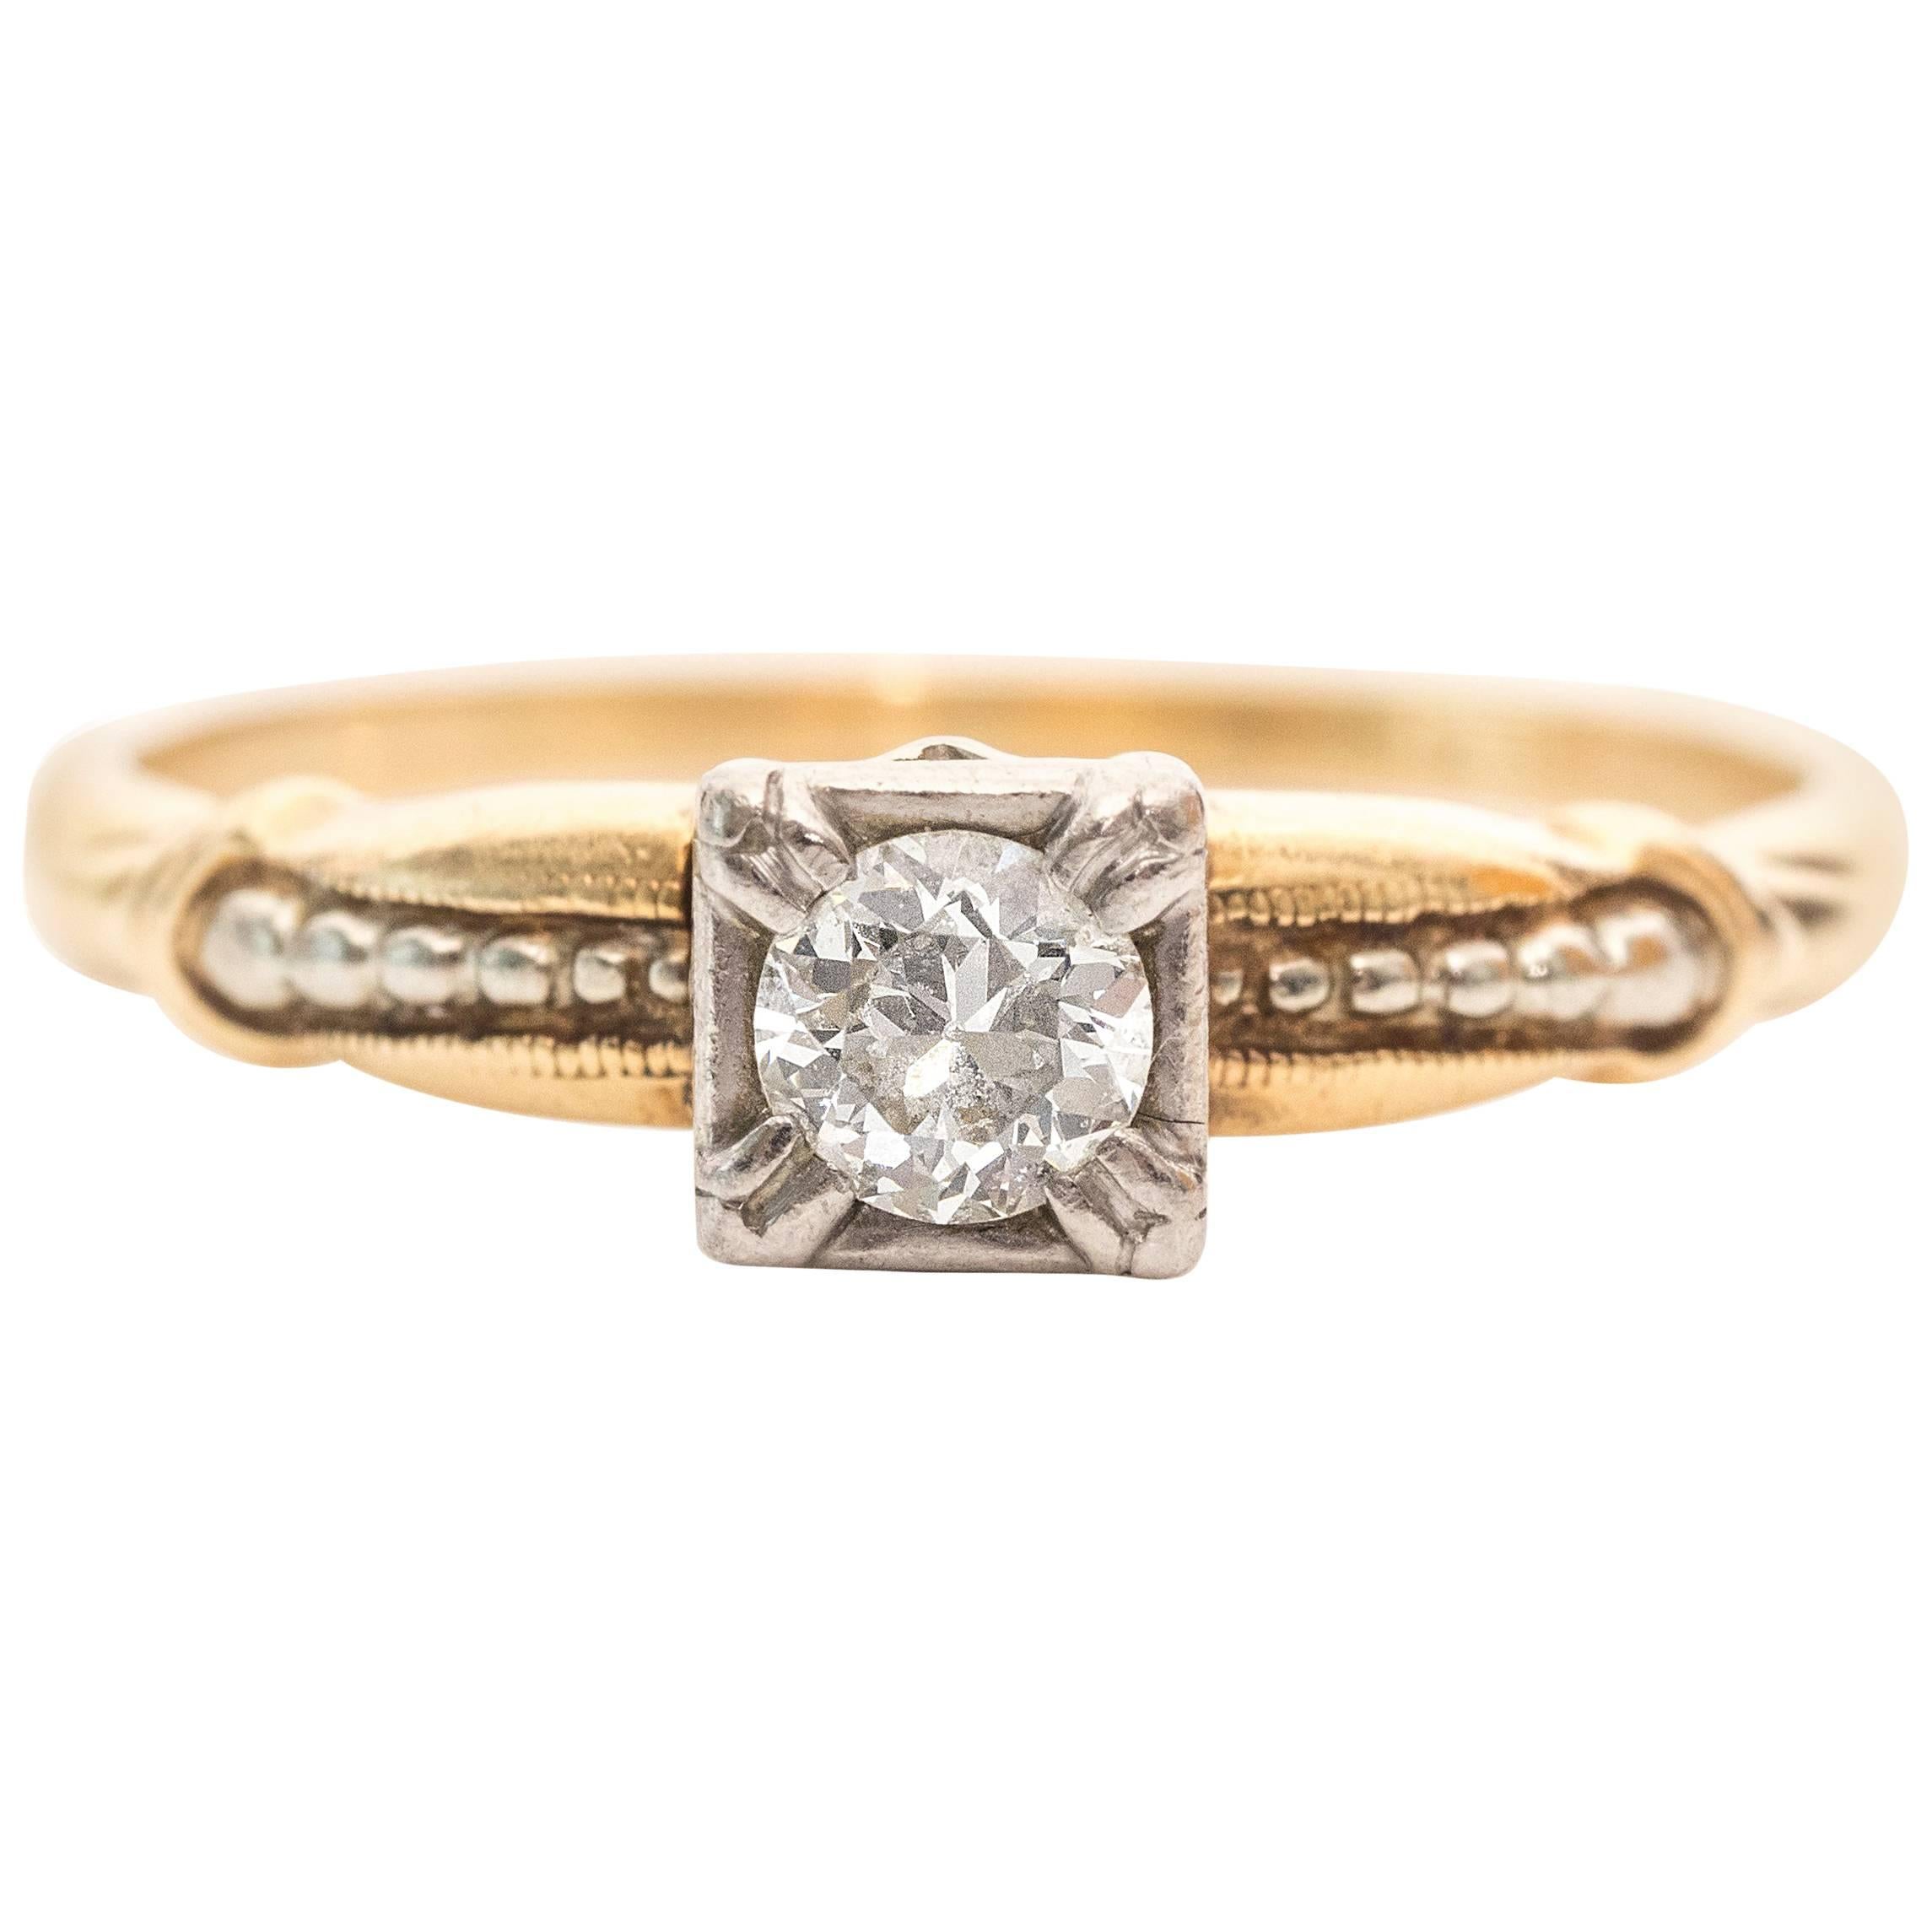 1930s Art Deco .20 Carat Old European Diamond Solitaire Engagement Ring